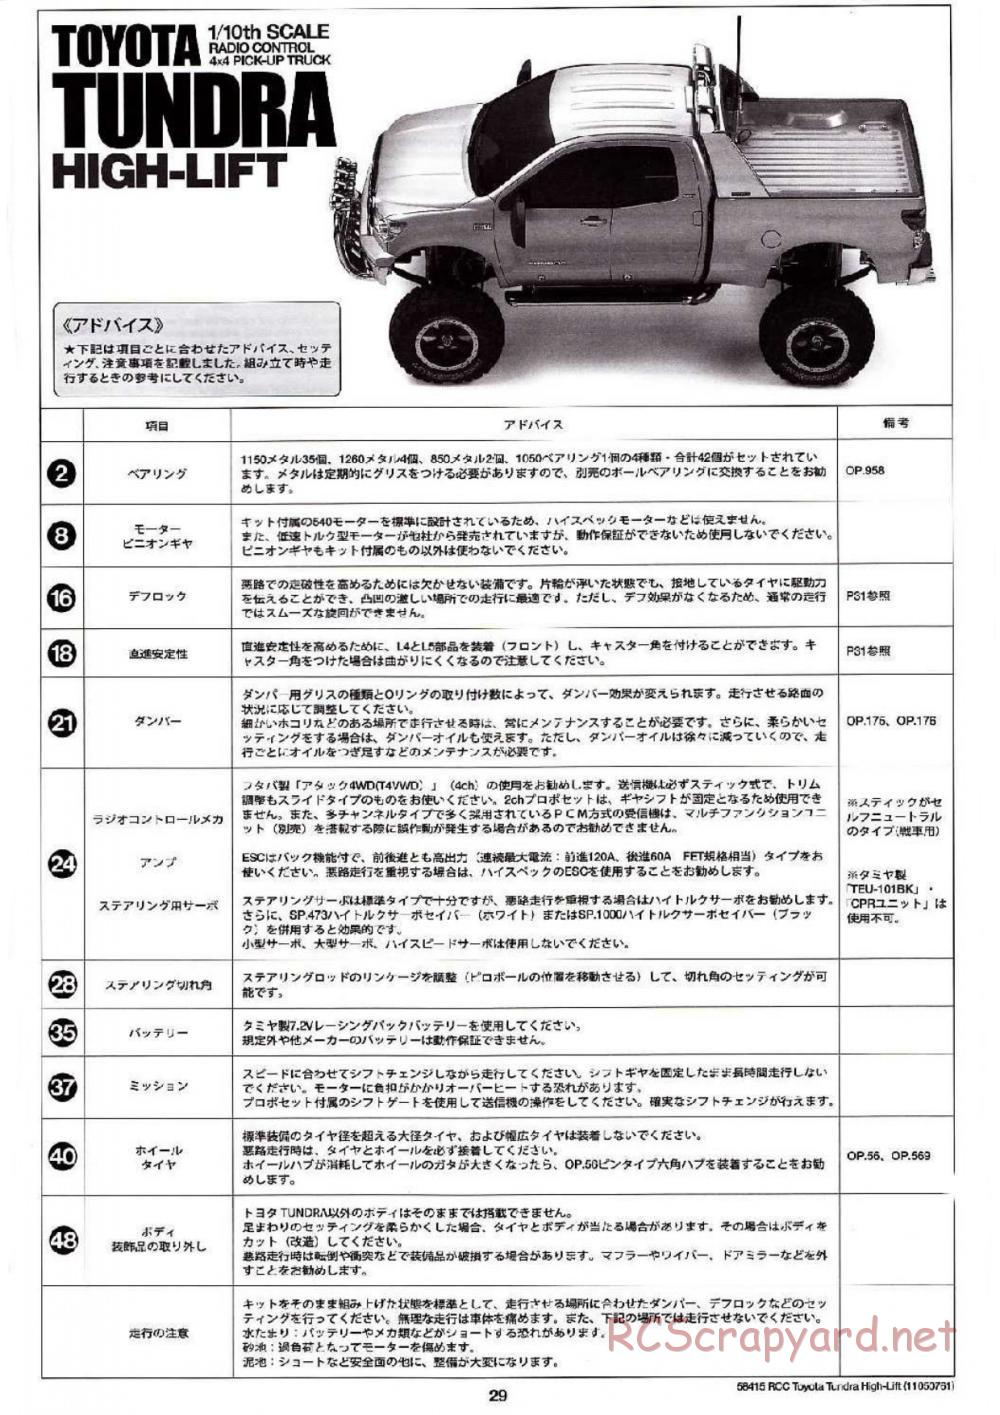 Tamiya - Toyota Tundra High-Lift Chassis - Manual - Page 29